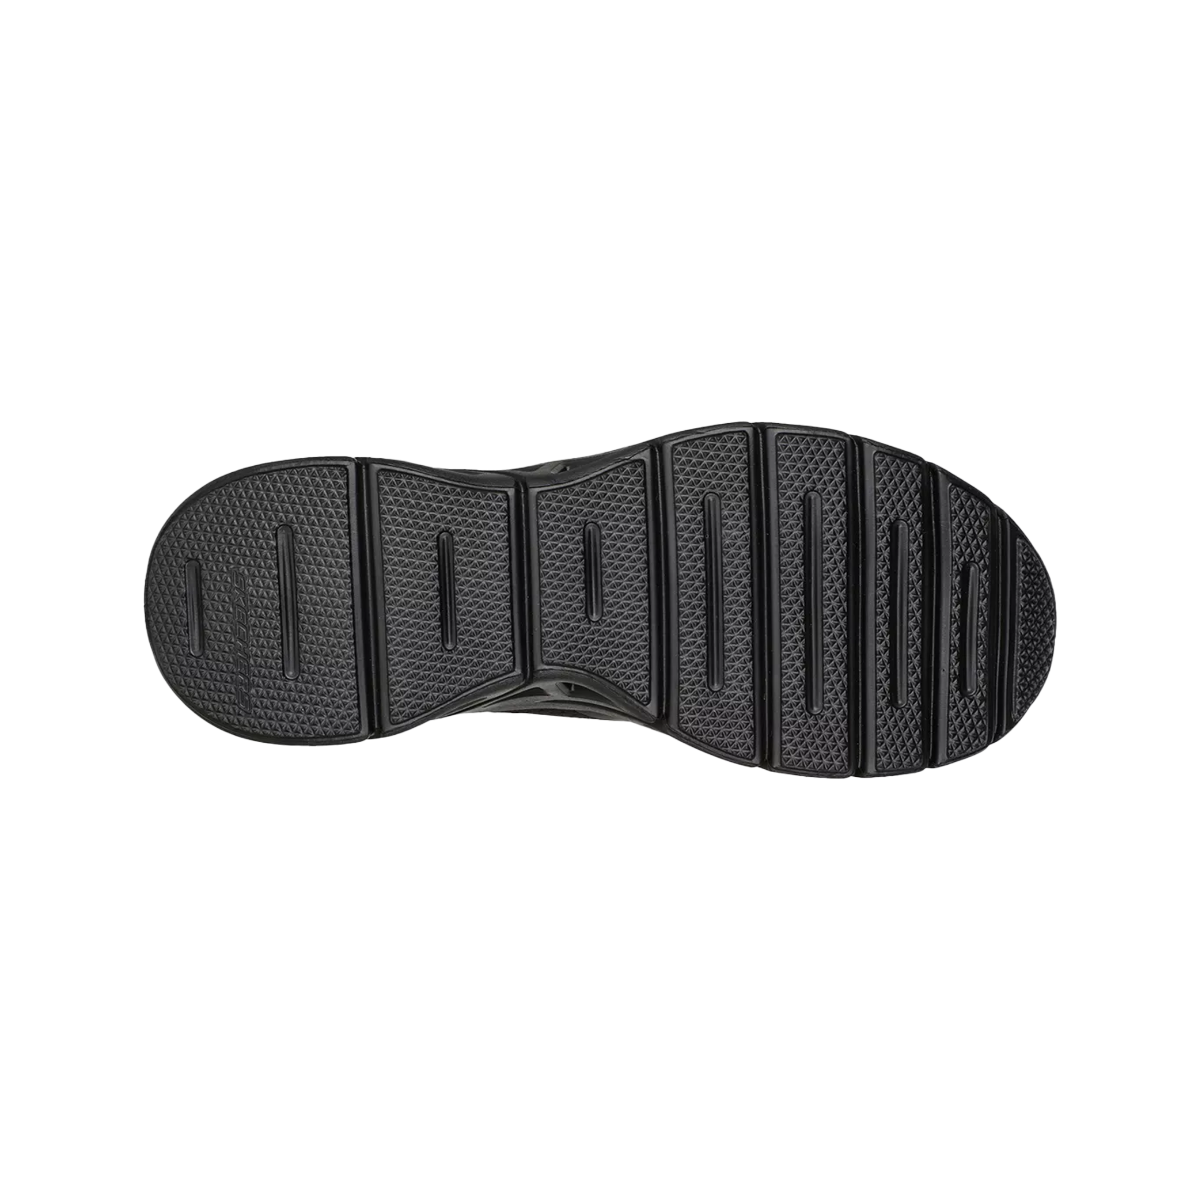 Skechers Glide Step Sports Shoes For Men, Black